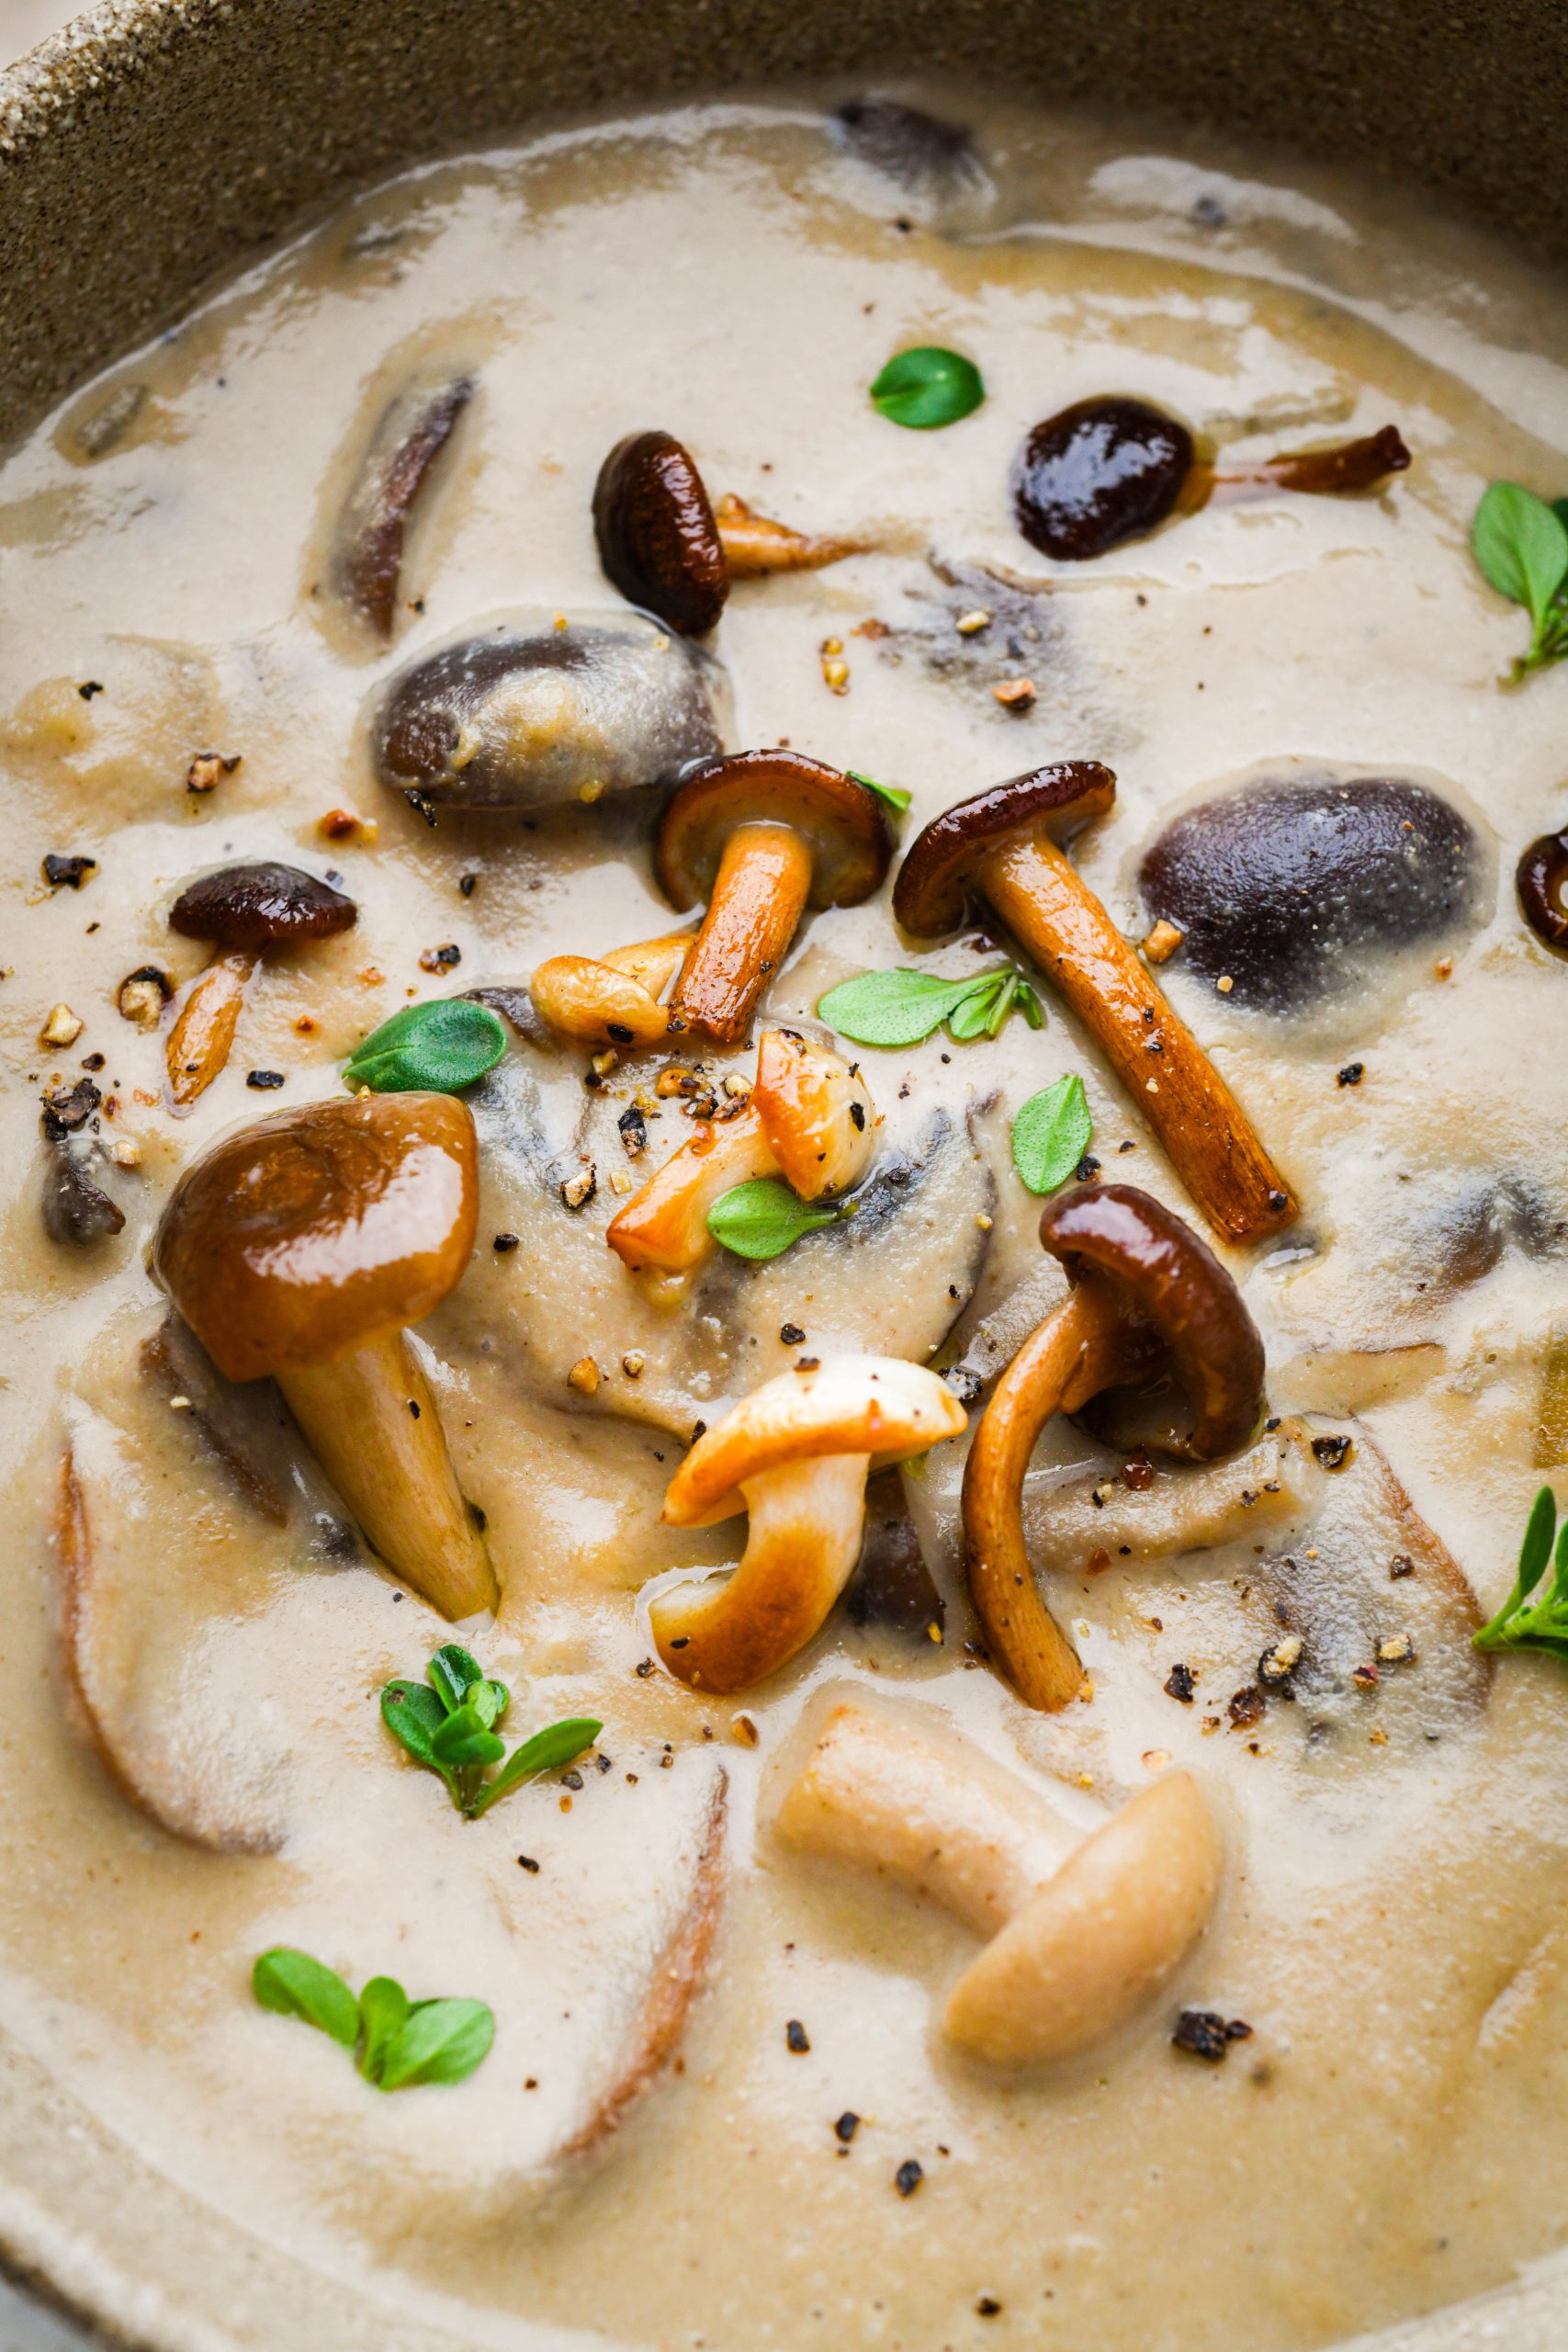 https://nyssaskitchen.com/wp-content/uploads/2019/05/Homemade-Cream-of-Mushroom-Soup-29-scaled.jpg